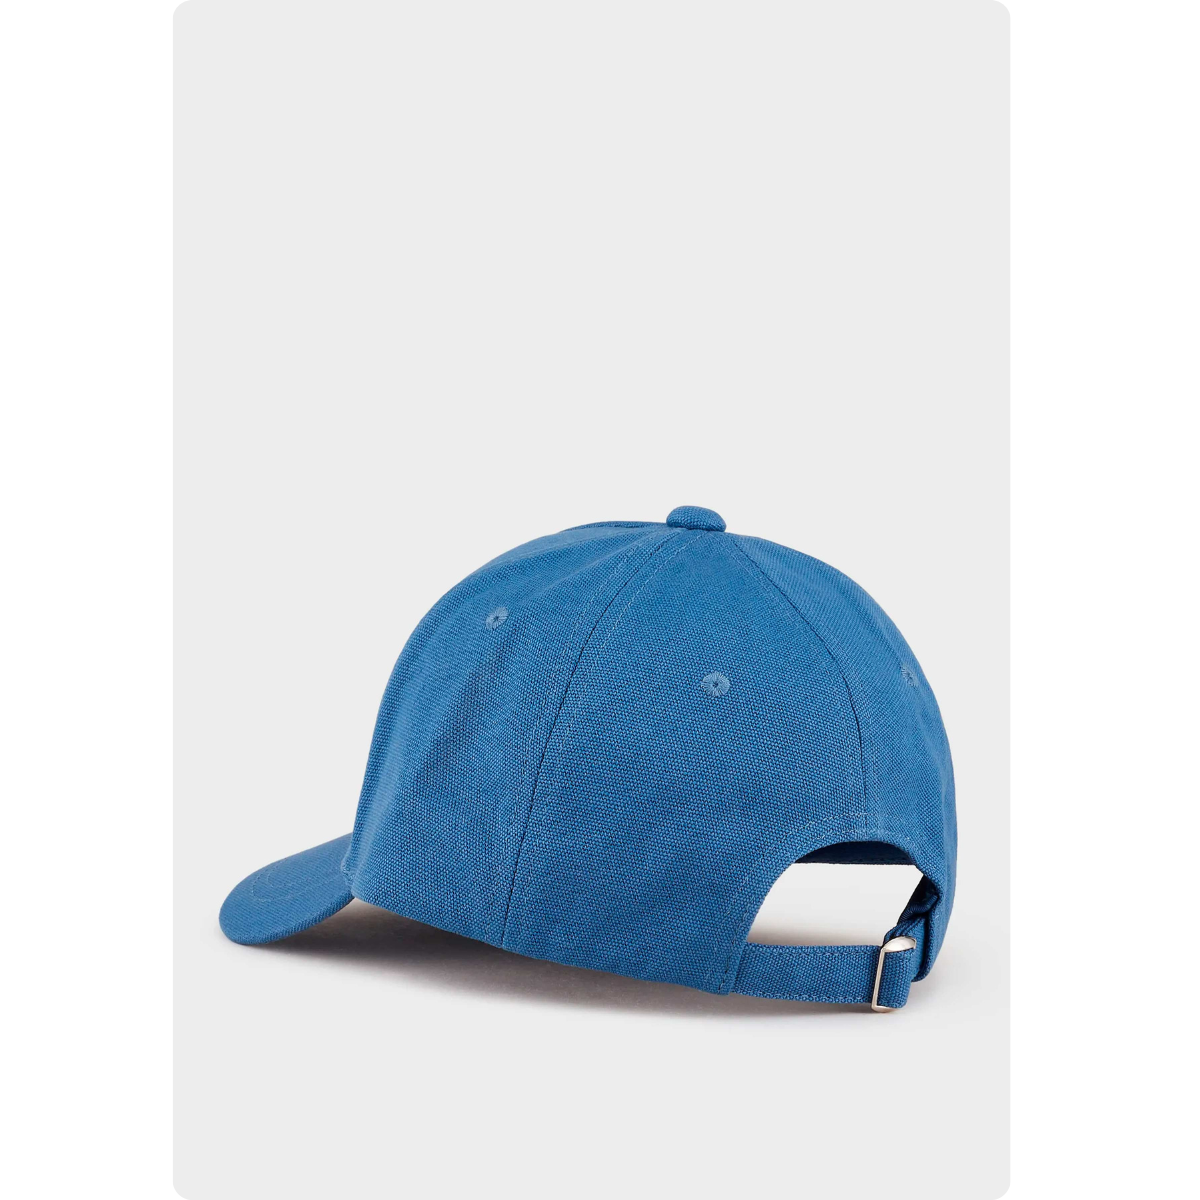 EA7 Giorgio Armani - Man Woven Baseball Hat - Dark Blue